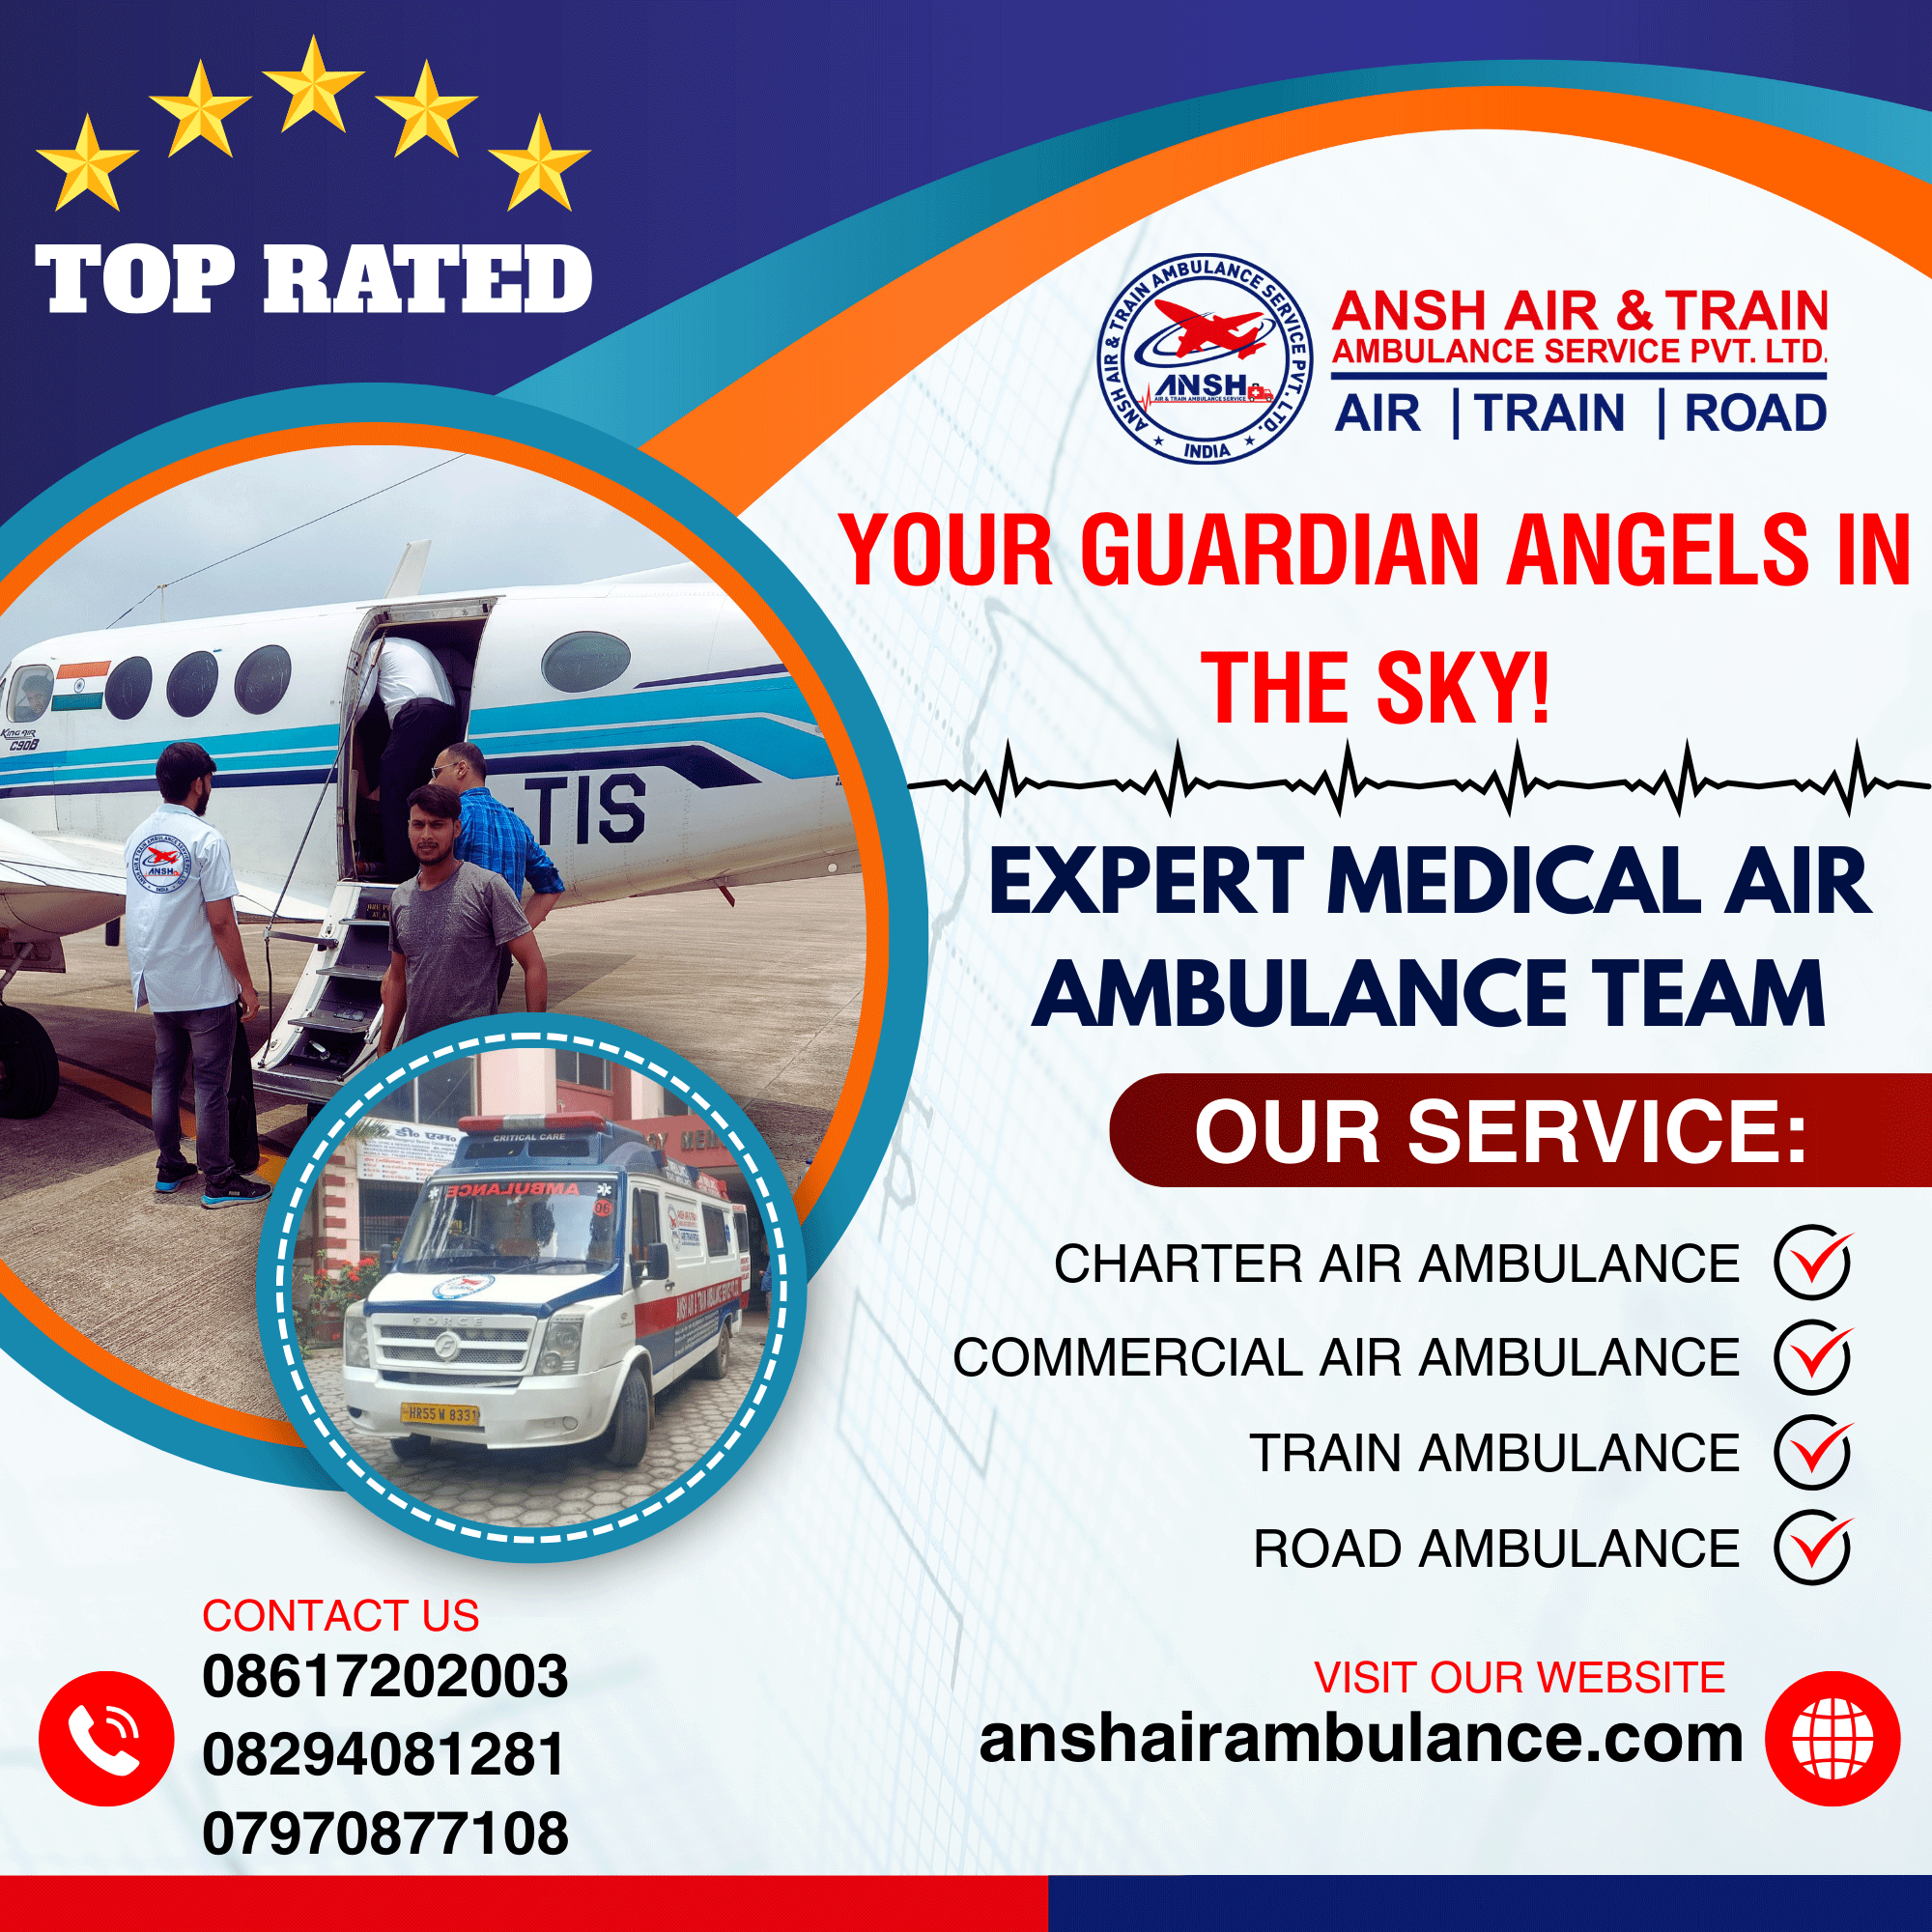 Ansh Air Ambulance Services in Kolkata - An Evacuation Is Very Easy